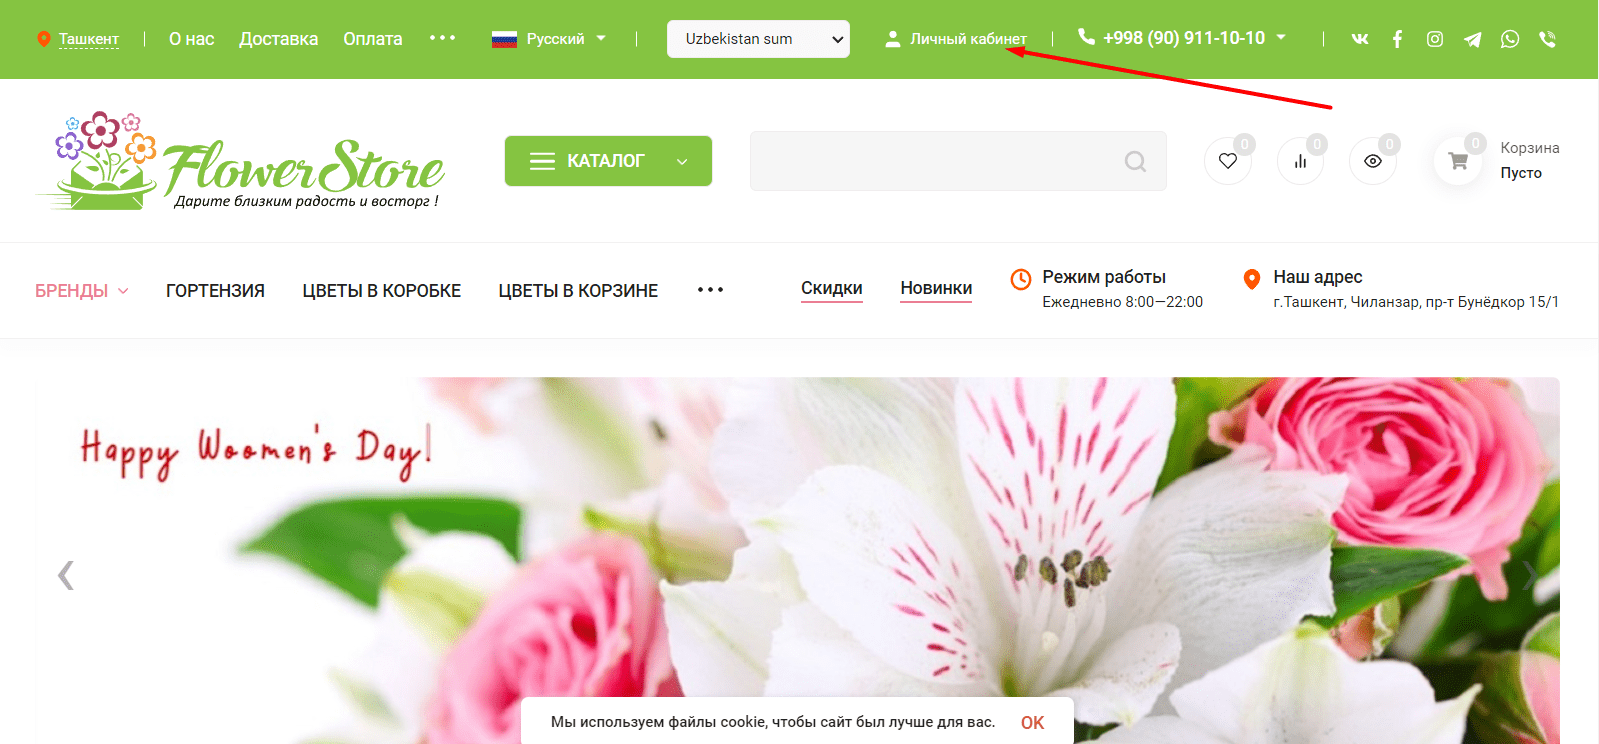 FlowerStore-Uzbekistan (flowerstore.uz)